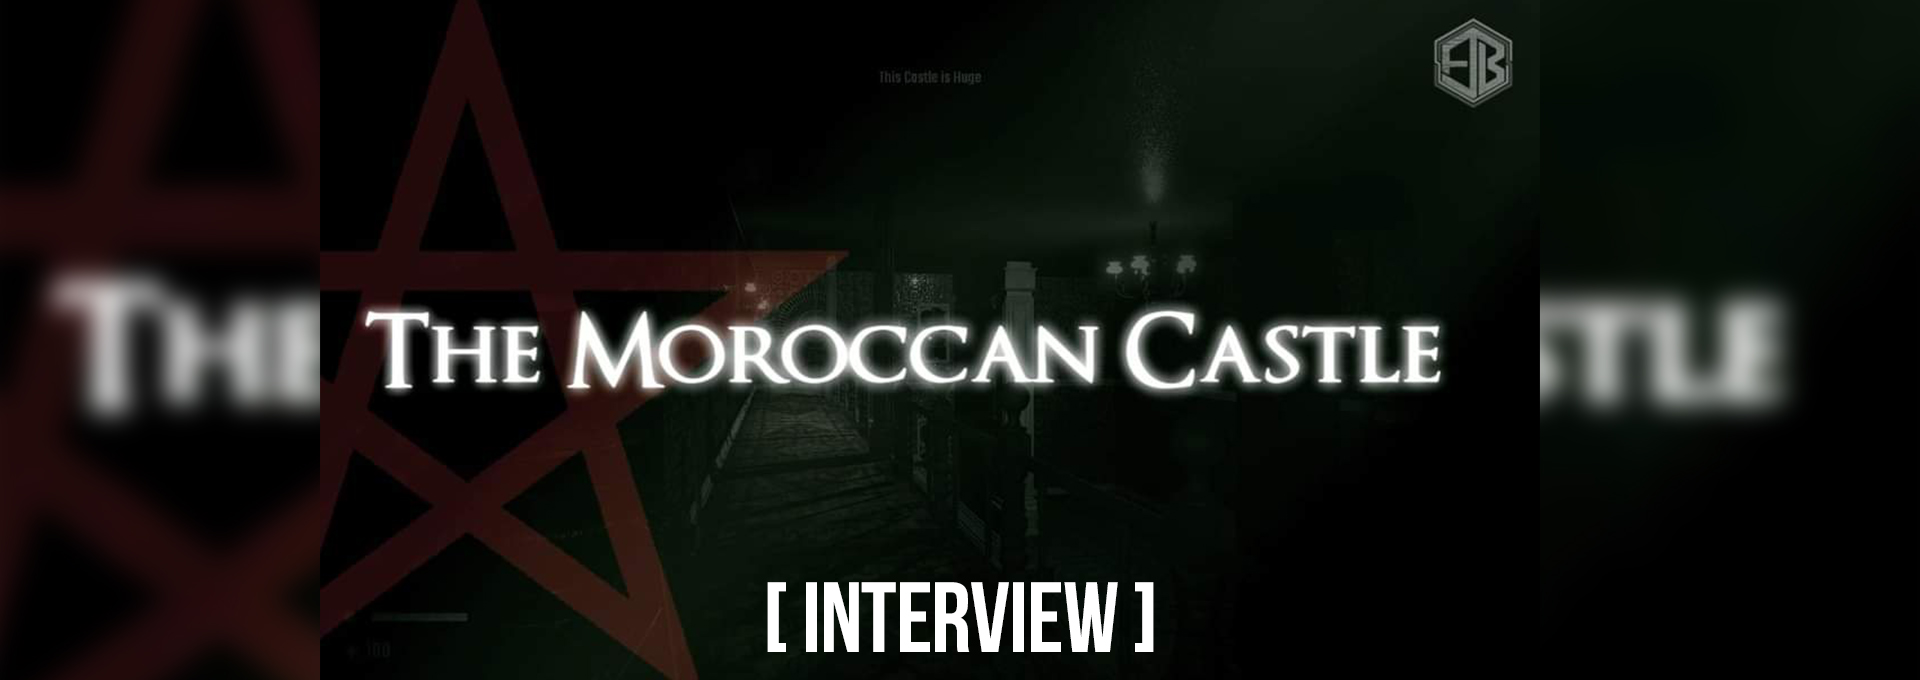 THE MOROCCAN CASTLE